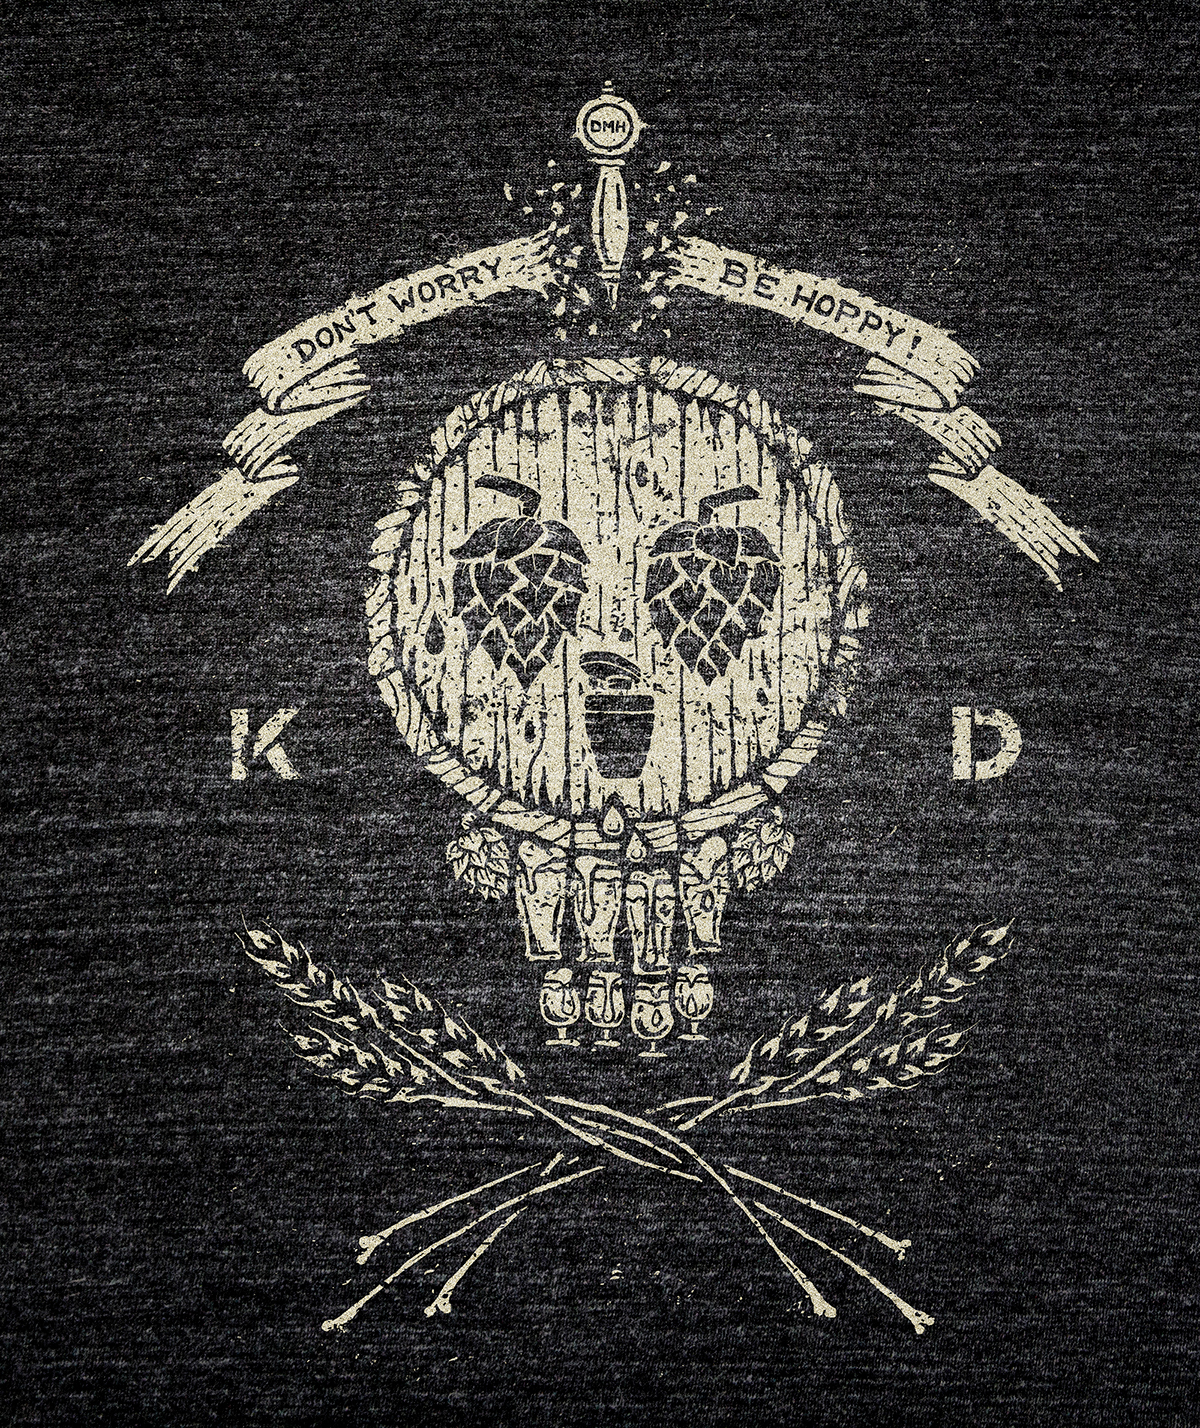 Keg Keg Day DMH beer skulls skull hops hand type black and white tshirts shirts wood texture wheat